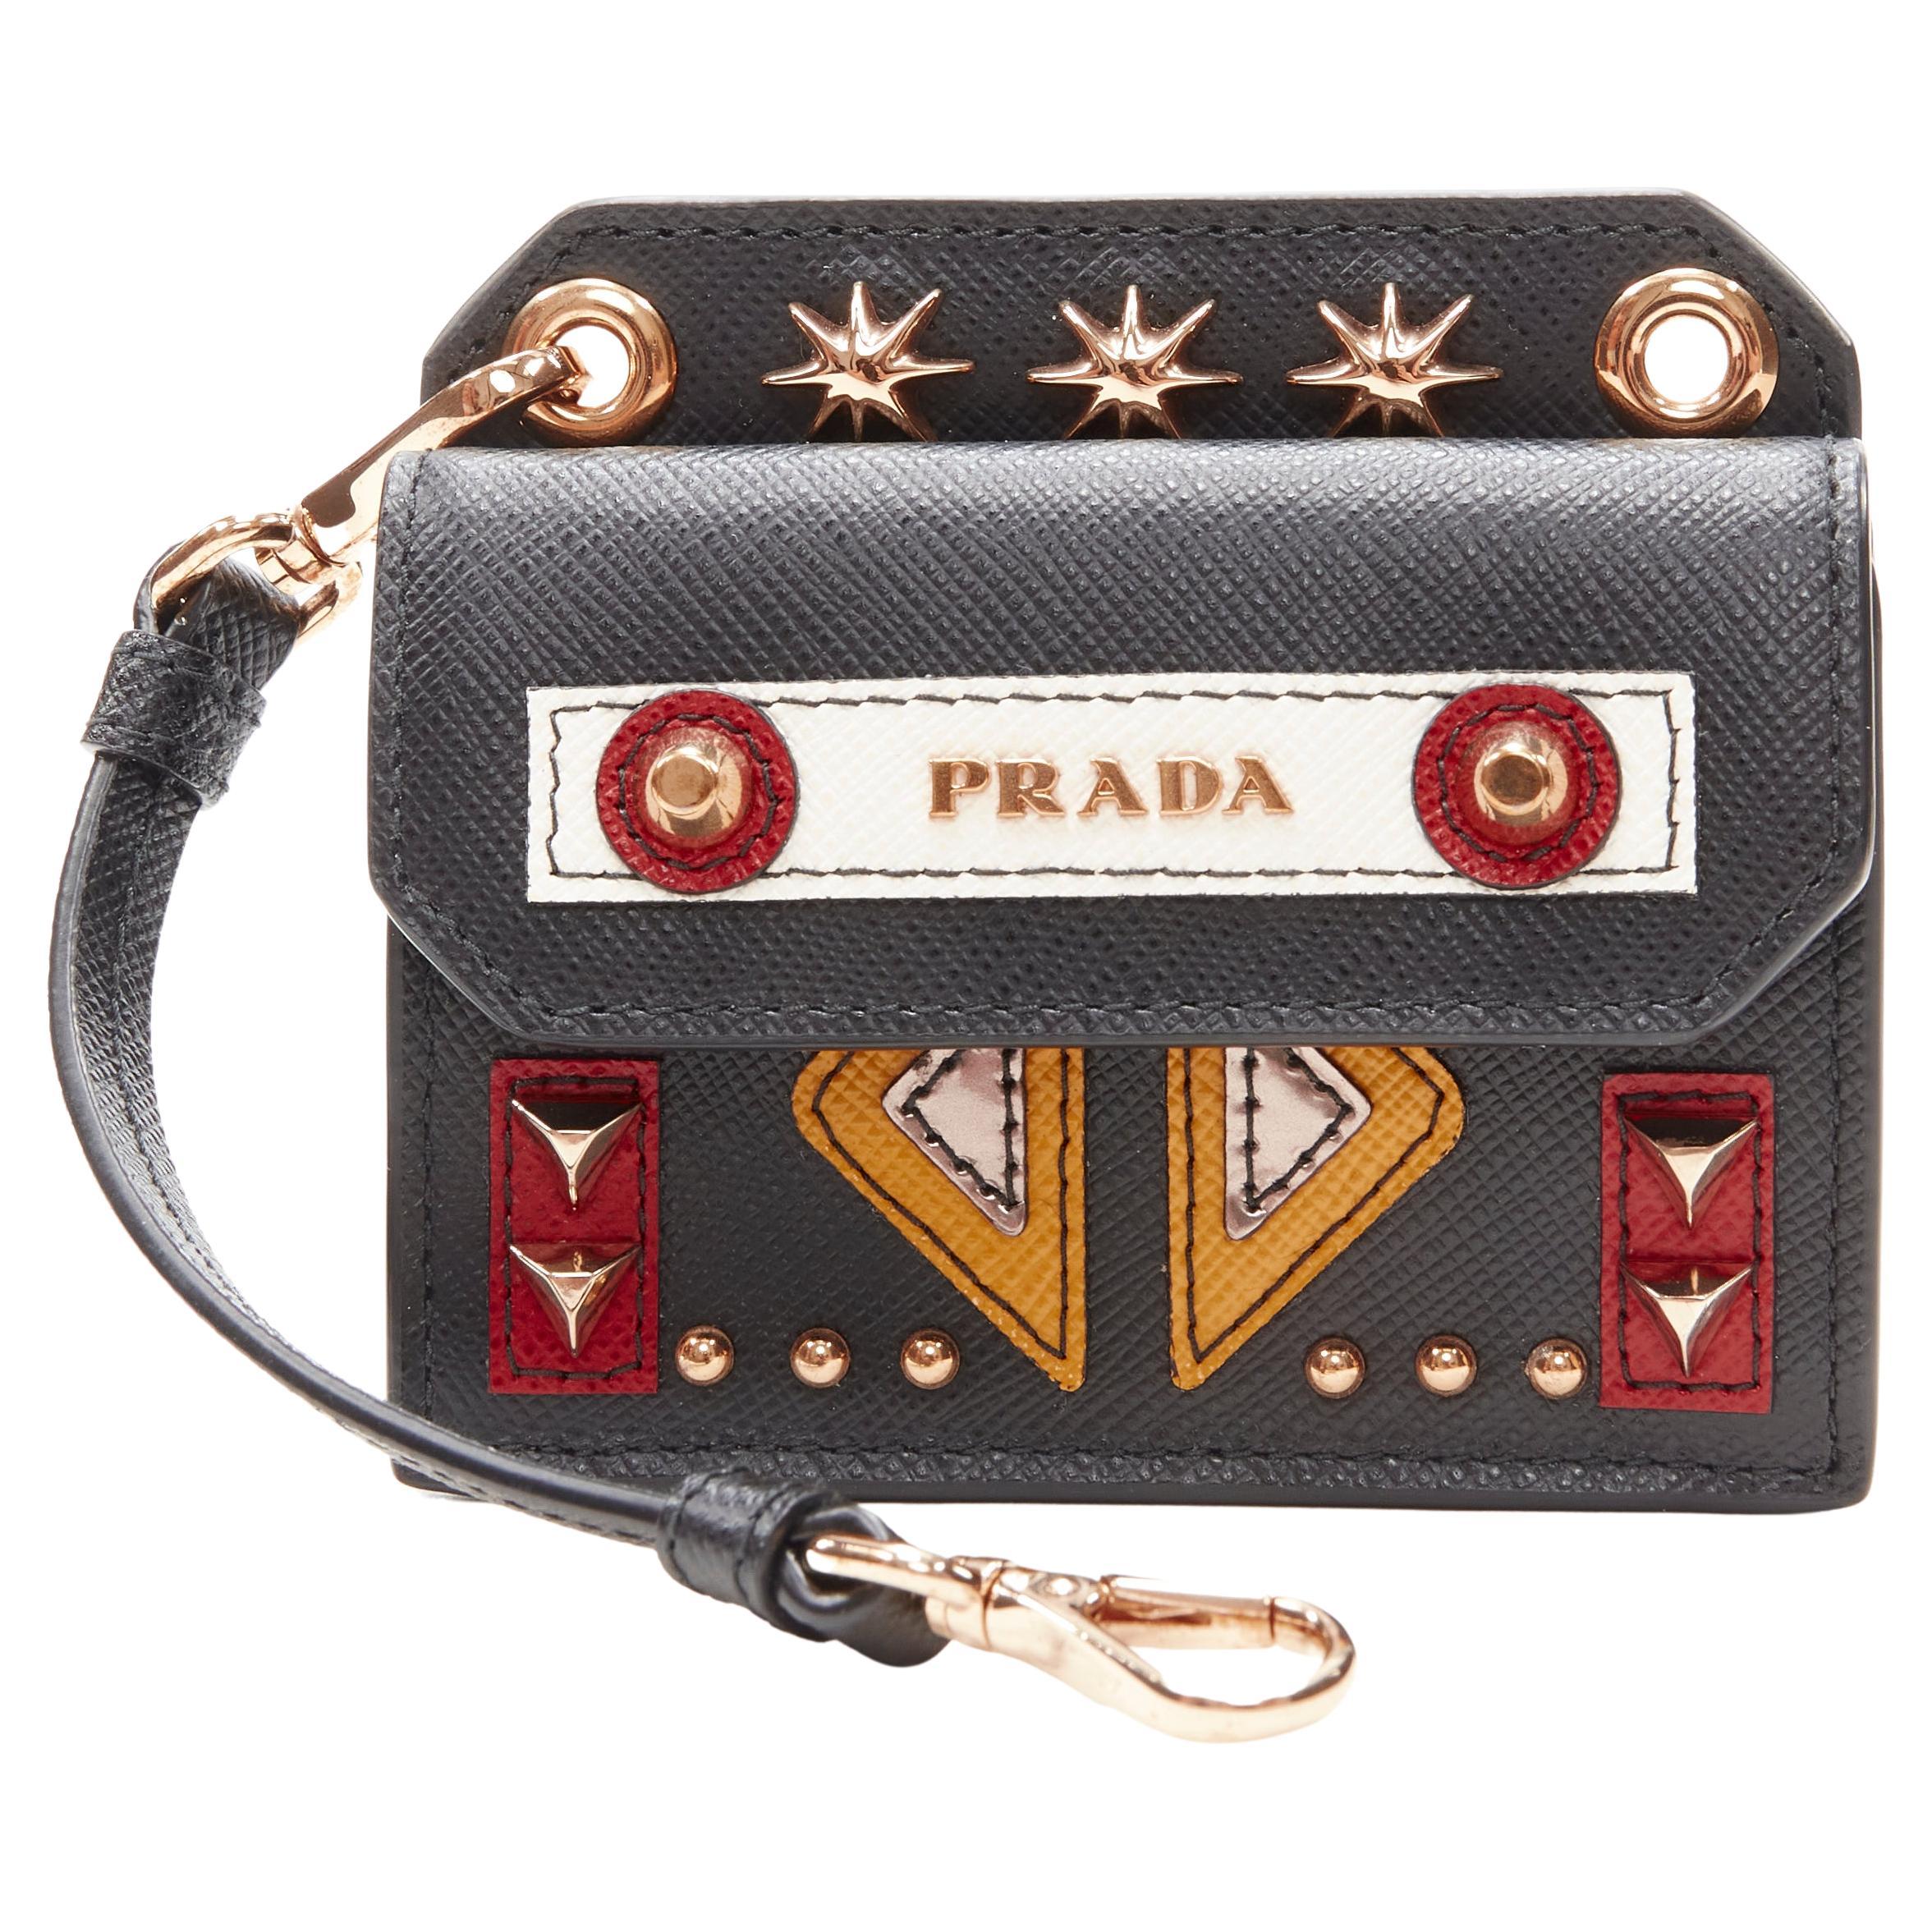 Prada Charm - 6 For Sale on 1stDibs